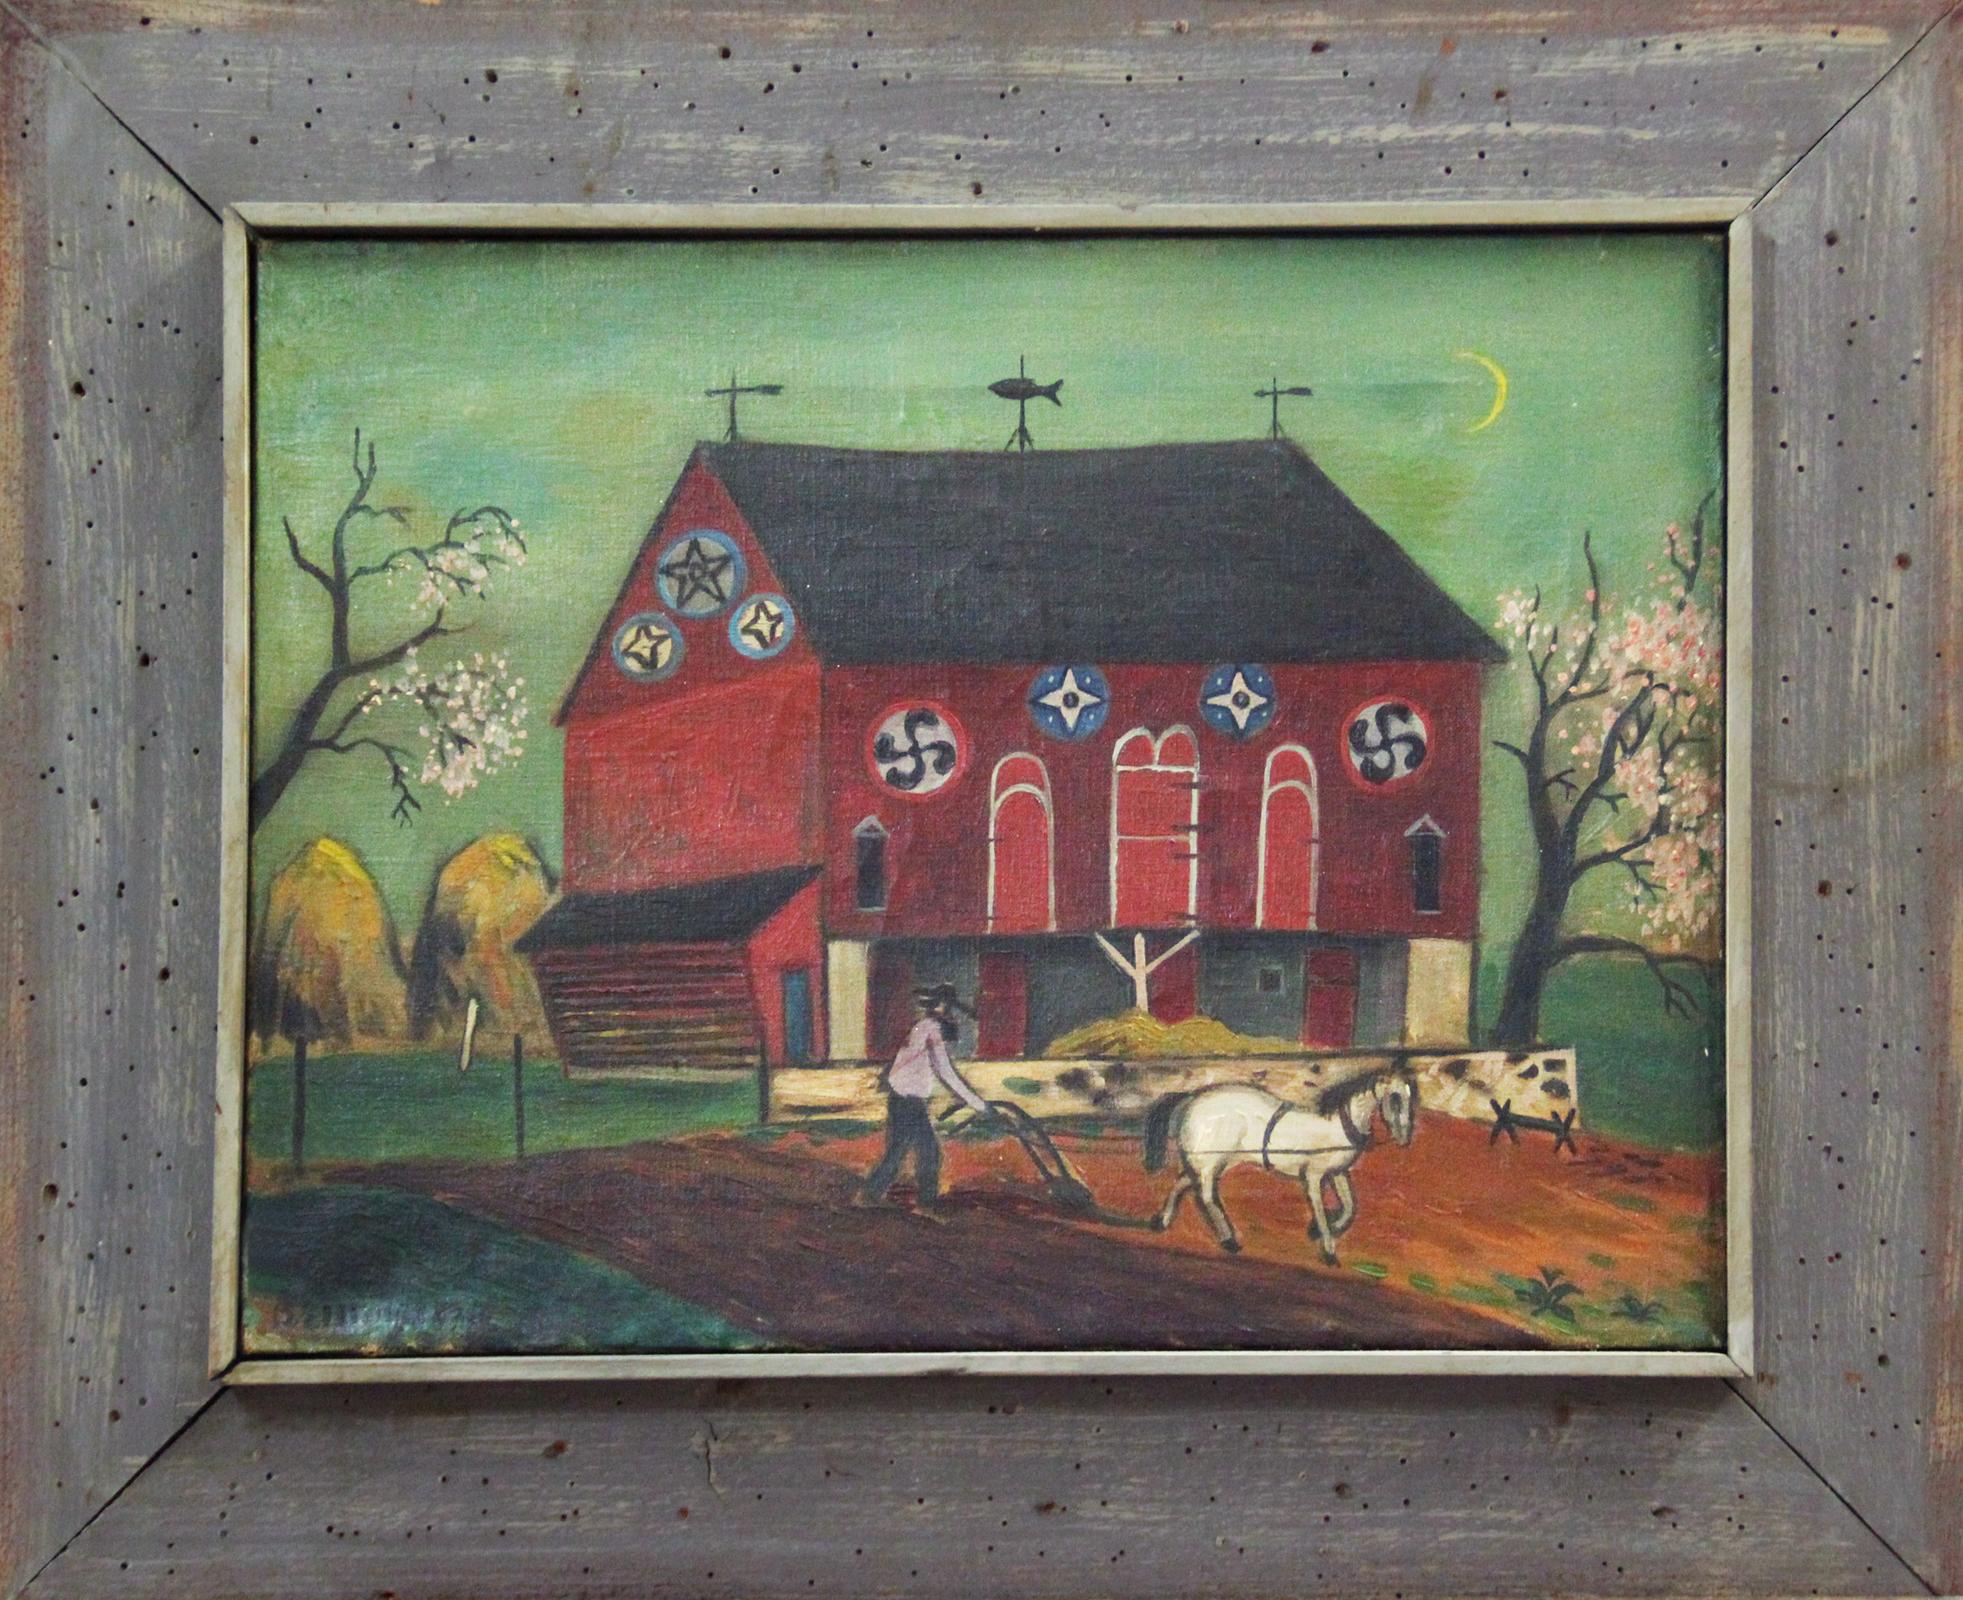 Spring Plowing, Folk Art Landscape with Figure, Pennsylvania Dutch Farm Scene - Painting by David Ellinger